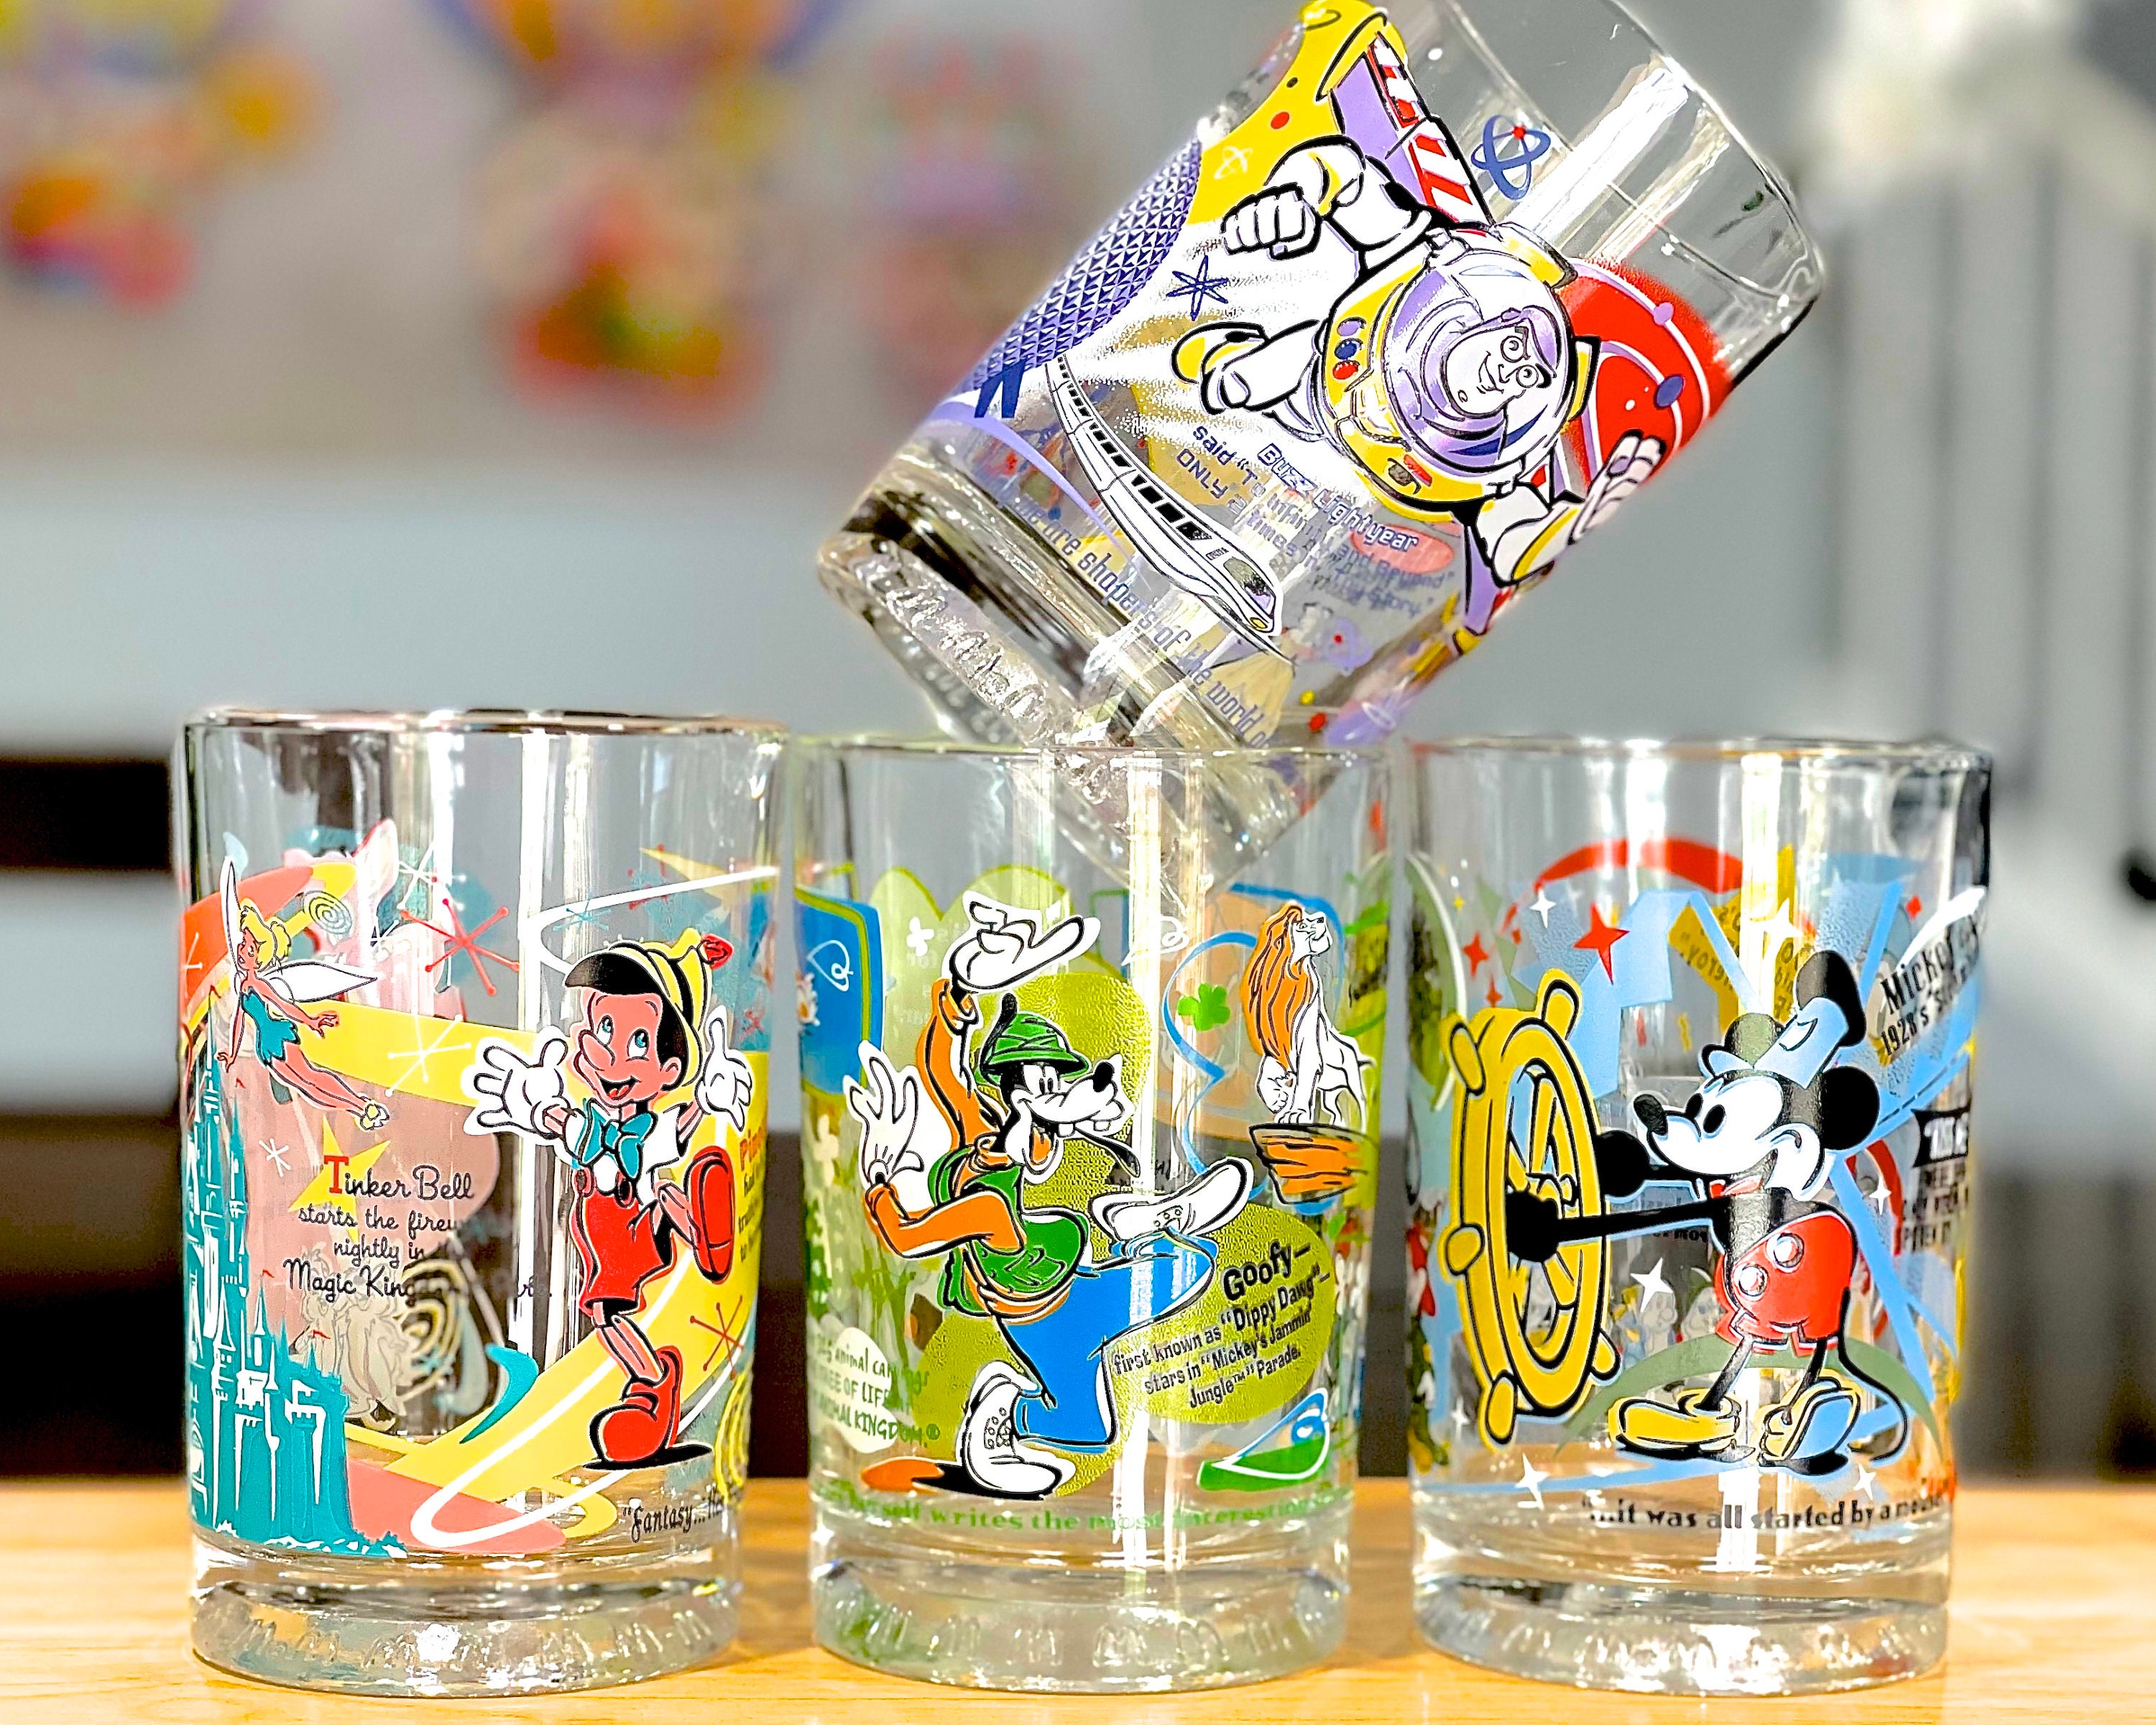 McDonalds Walt Disney World 100 Years of Magic Glass, Mickey